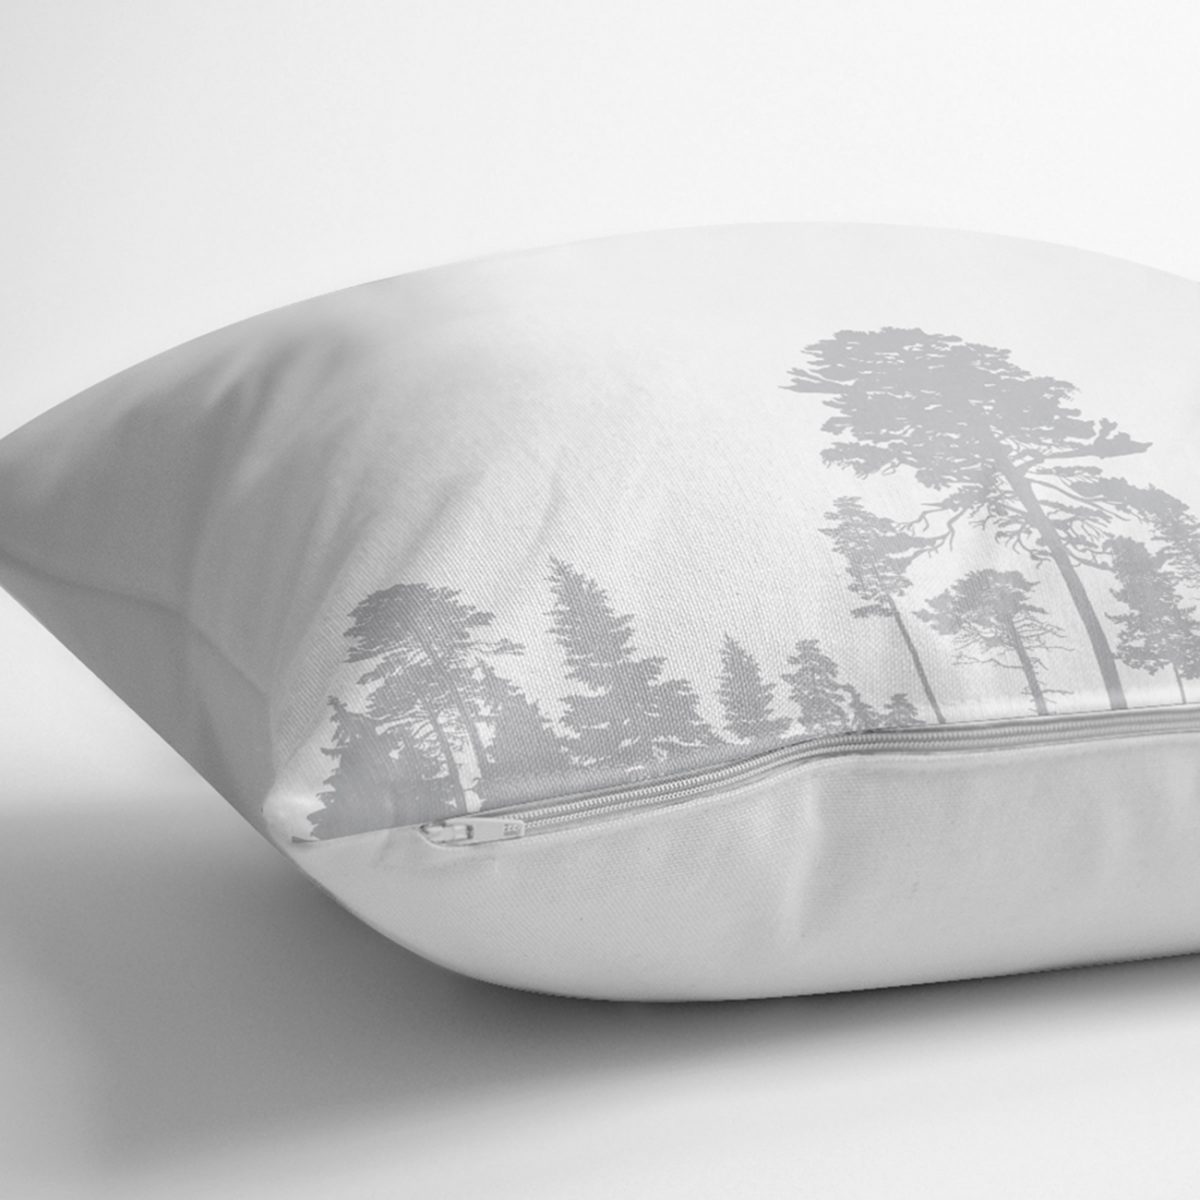 RealHomes Beyaz Zeminde Gri Ağaç Tasarımlı Dekoratif Kırlent Kılıfı Realhomes